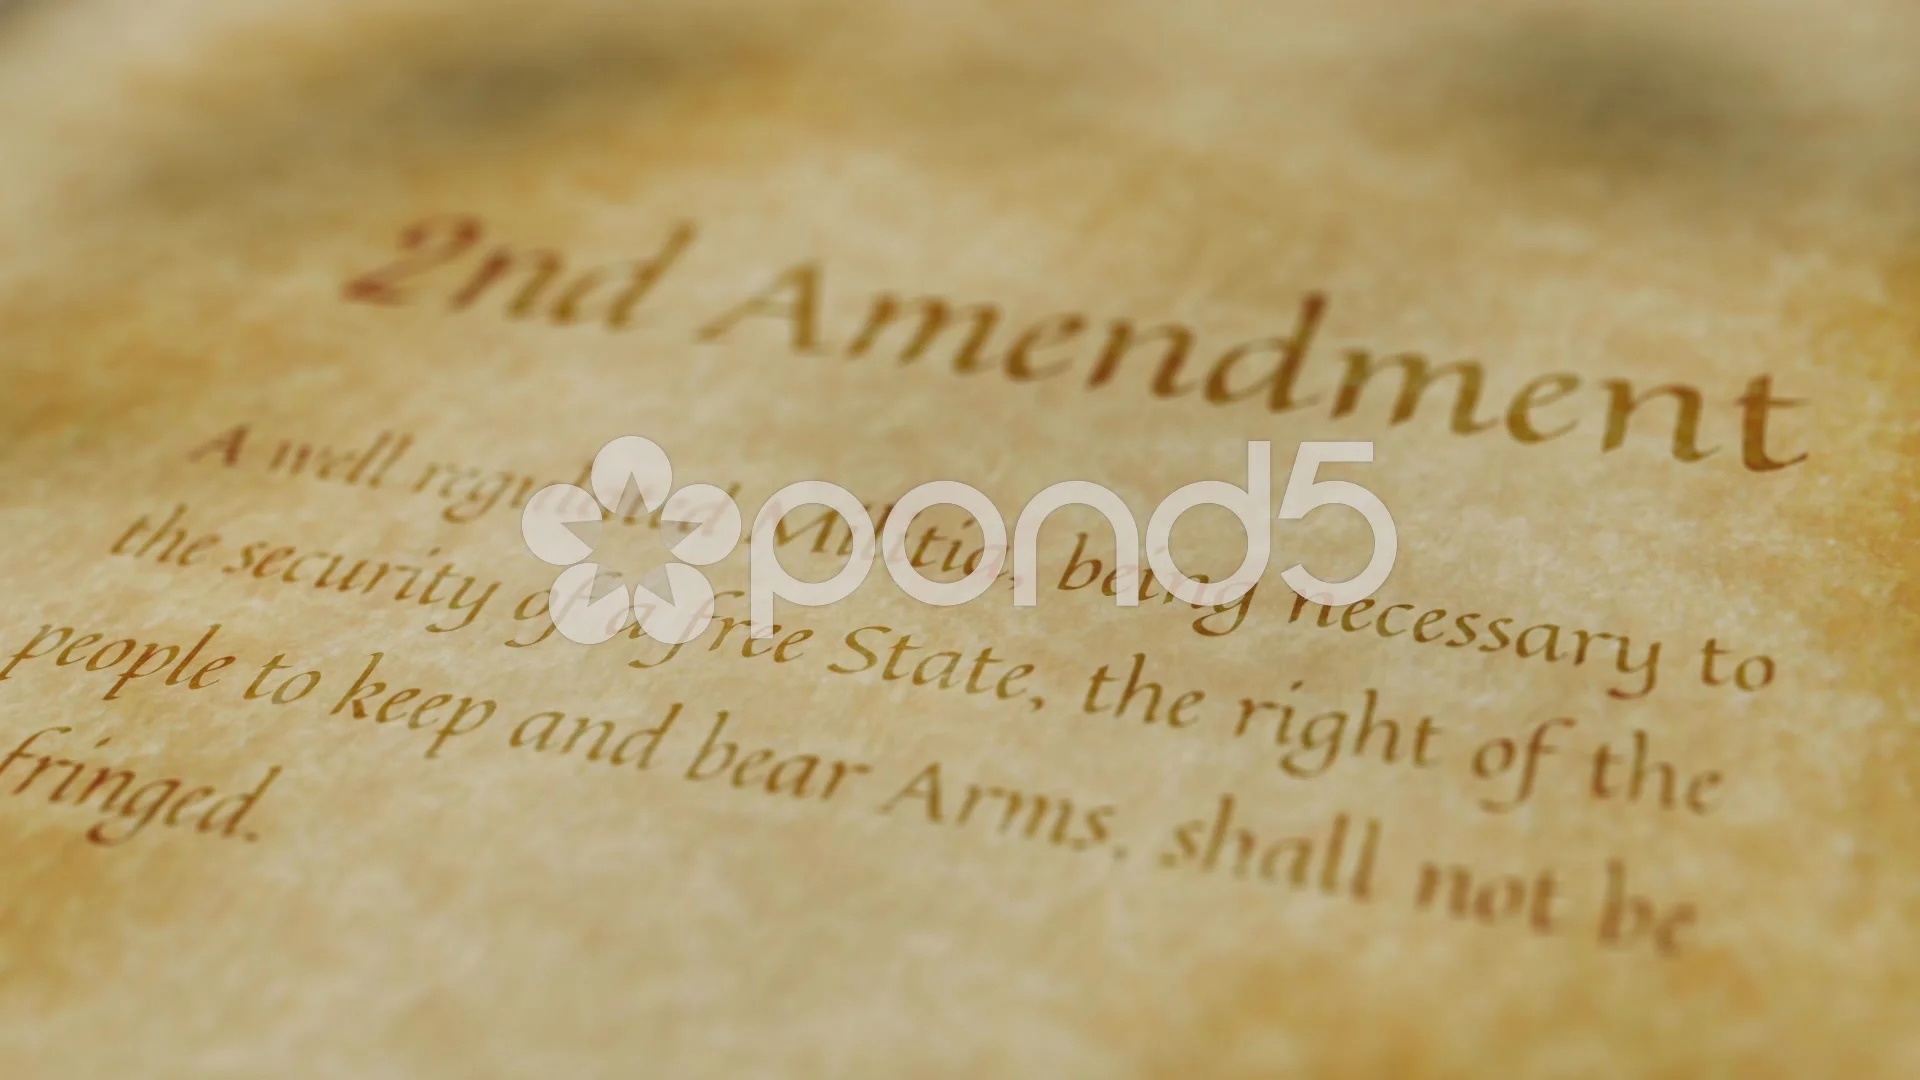 2nd amendment background